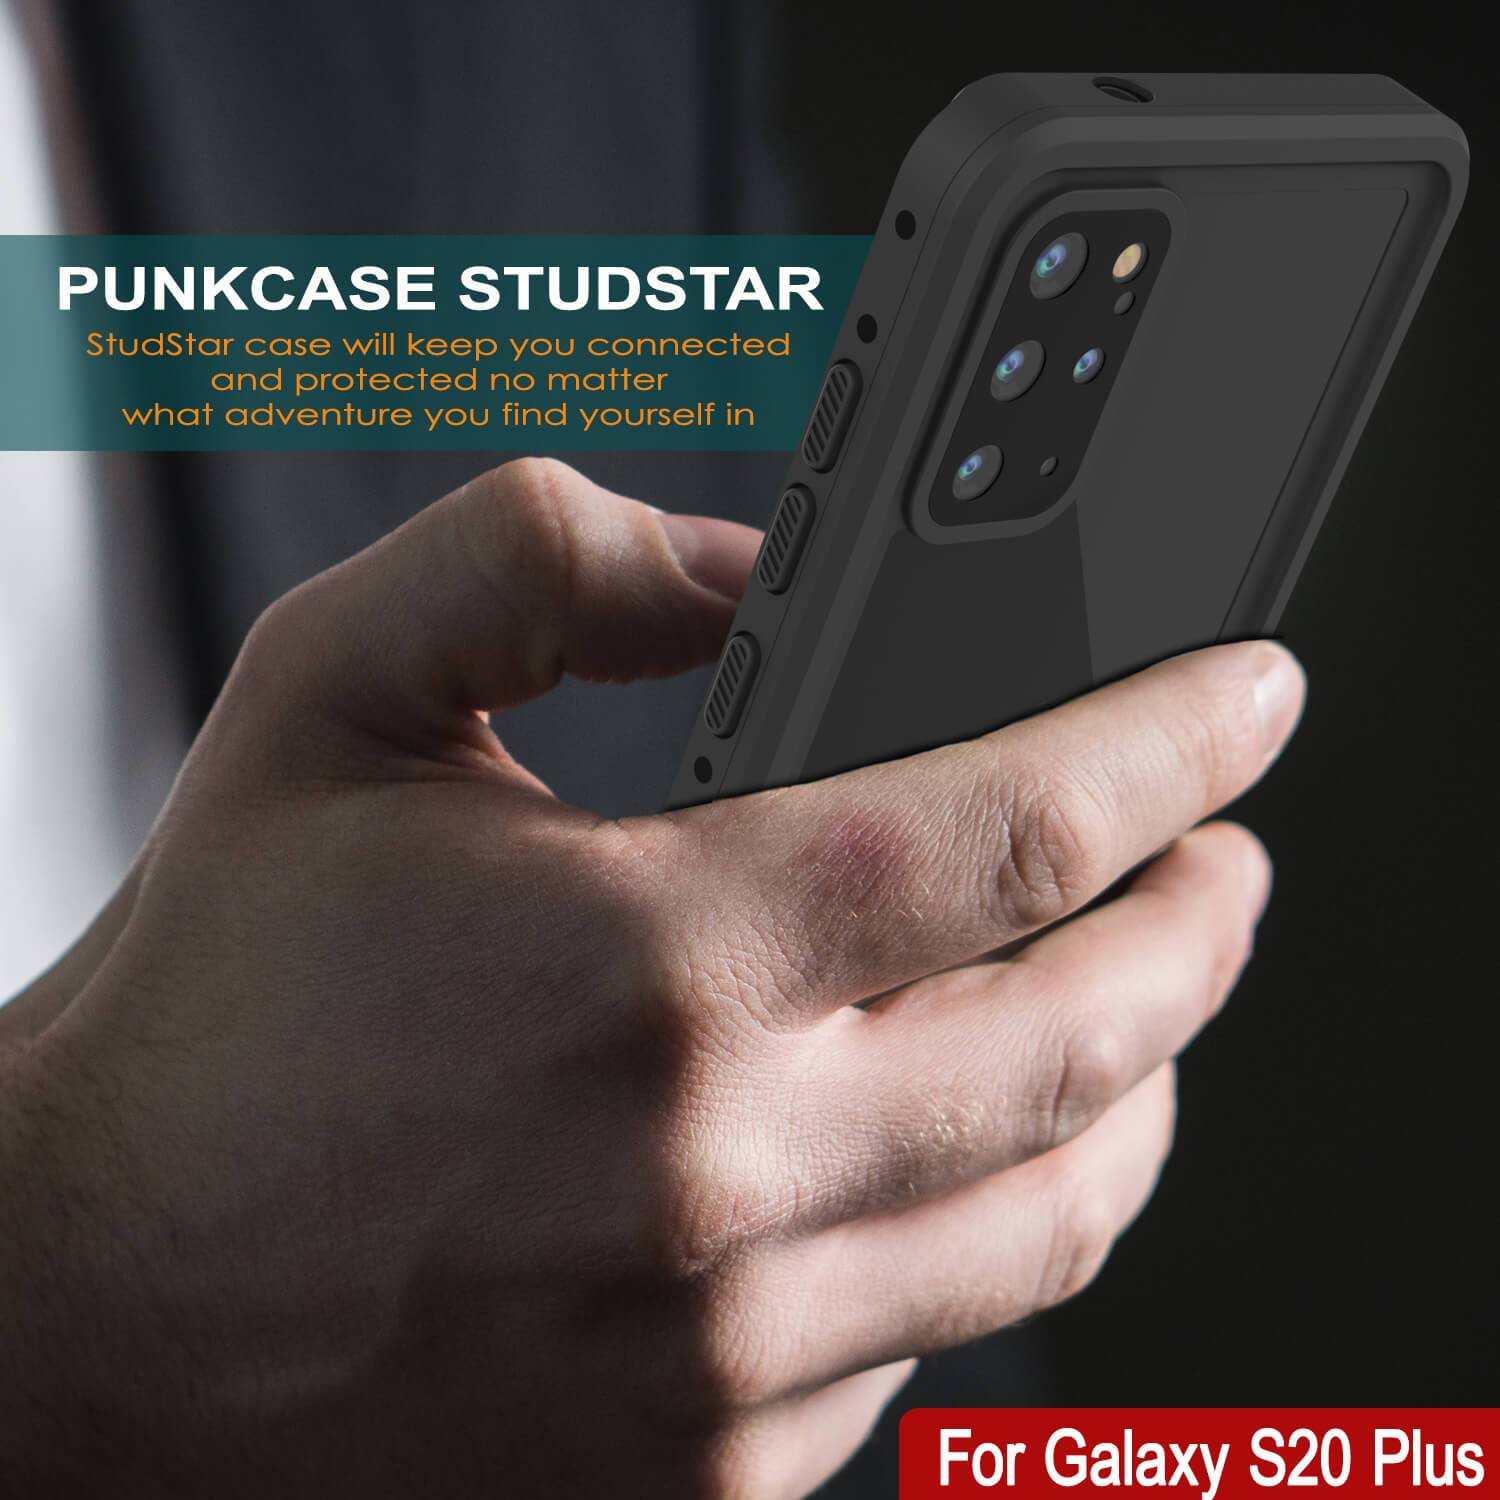 Galaxy S20+ Plus Waterproof Case PunkCase StudStar Black Thin 6.6ft Underwater IP68 Shock/Snow Proof